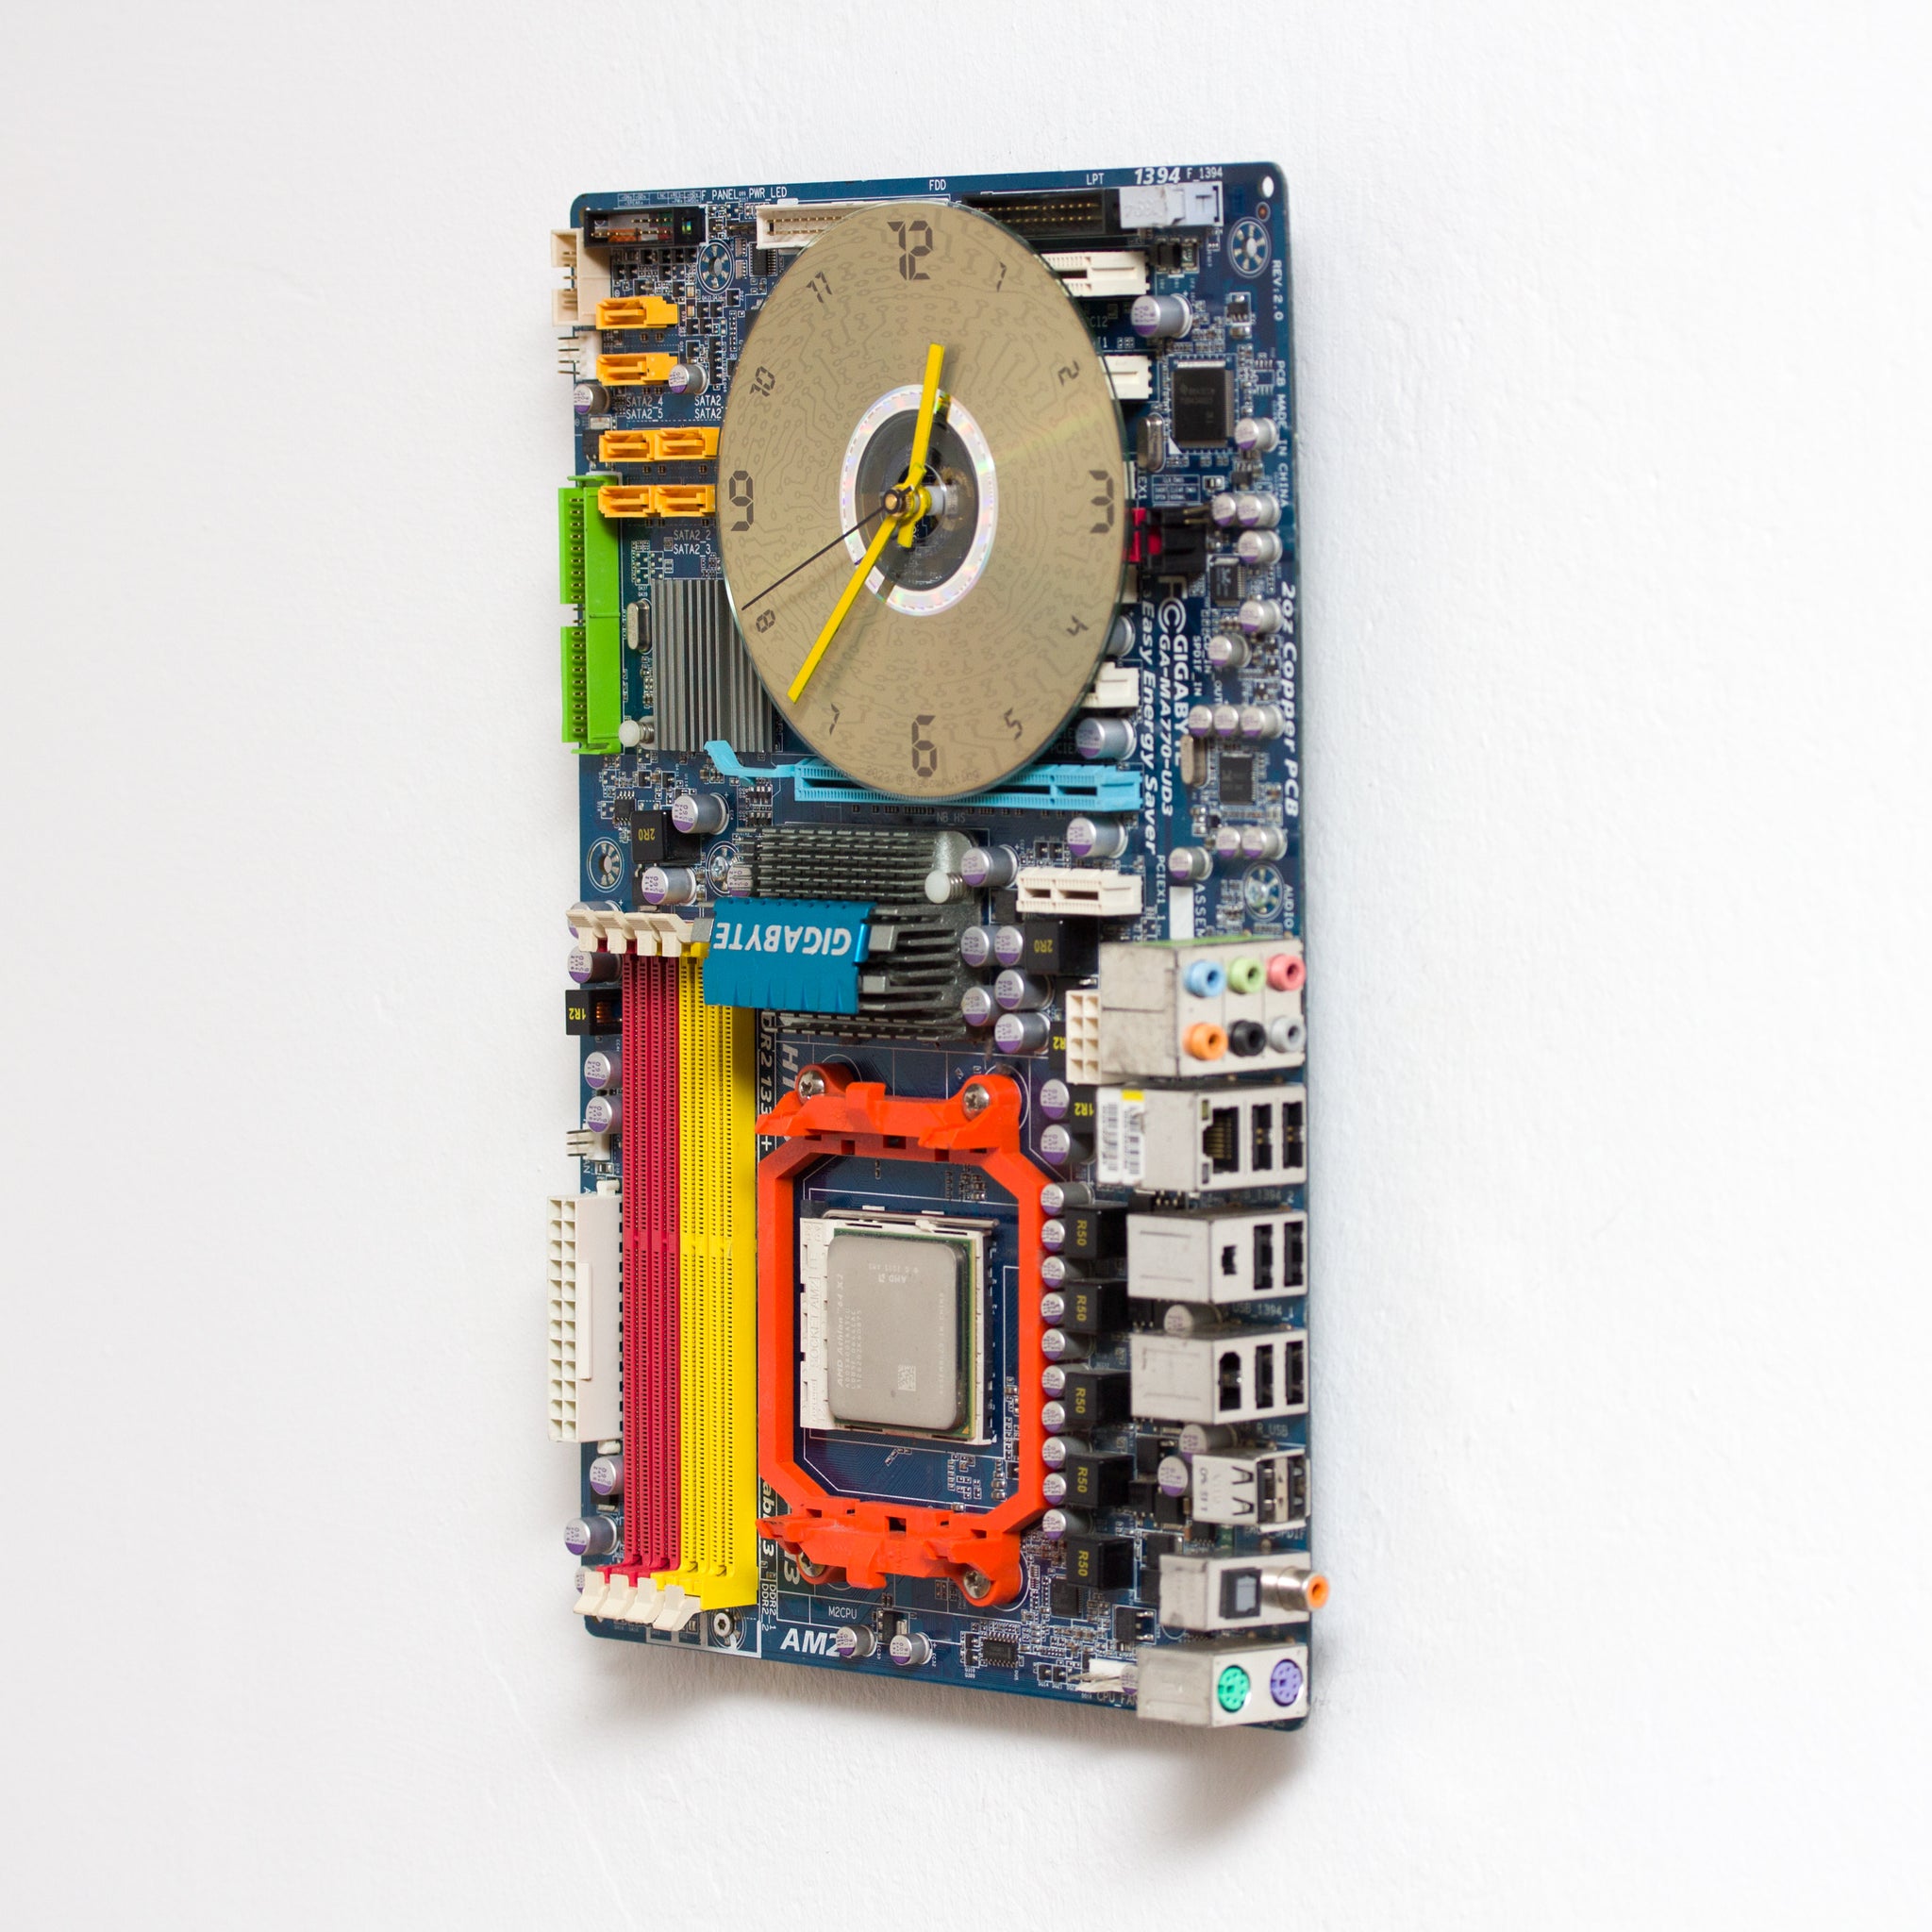 Geeky Wall Clock made of blue Circuit Board